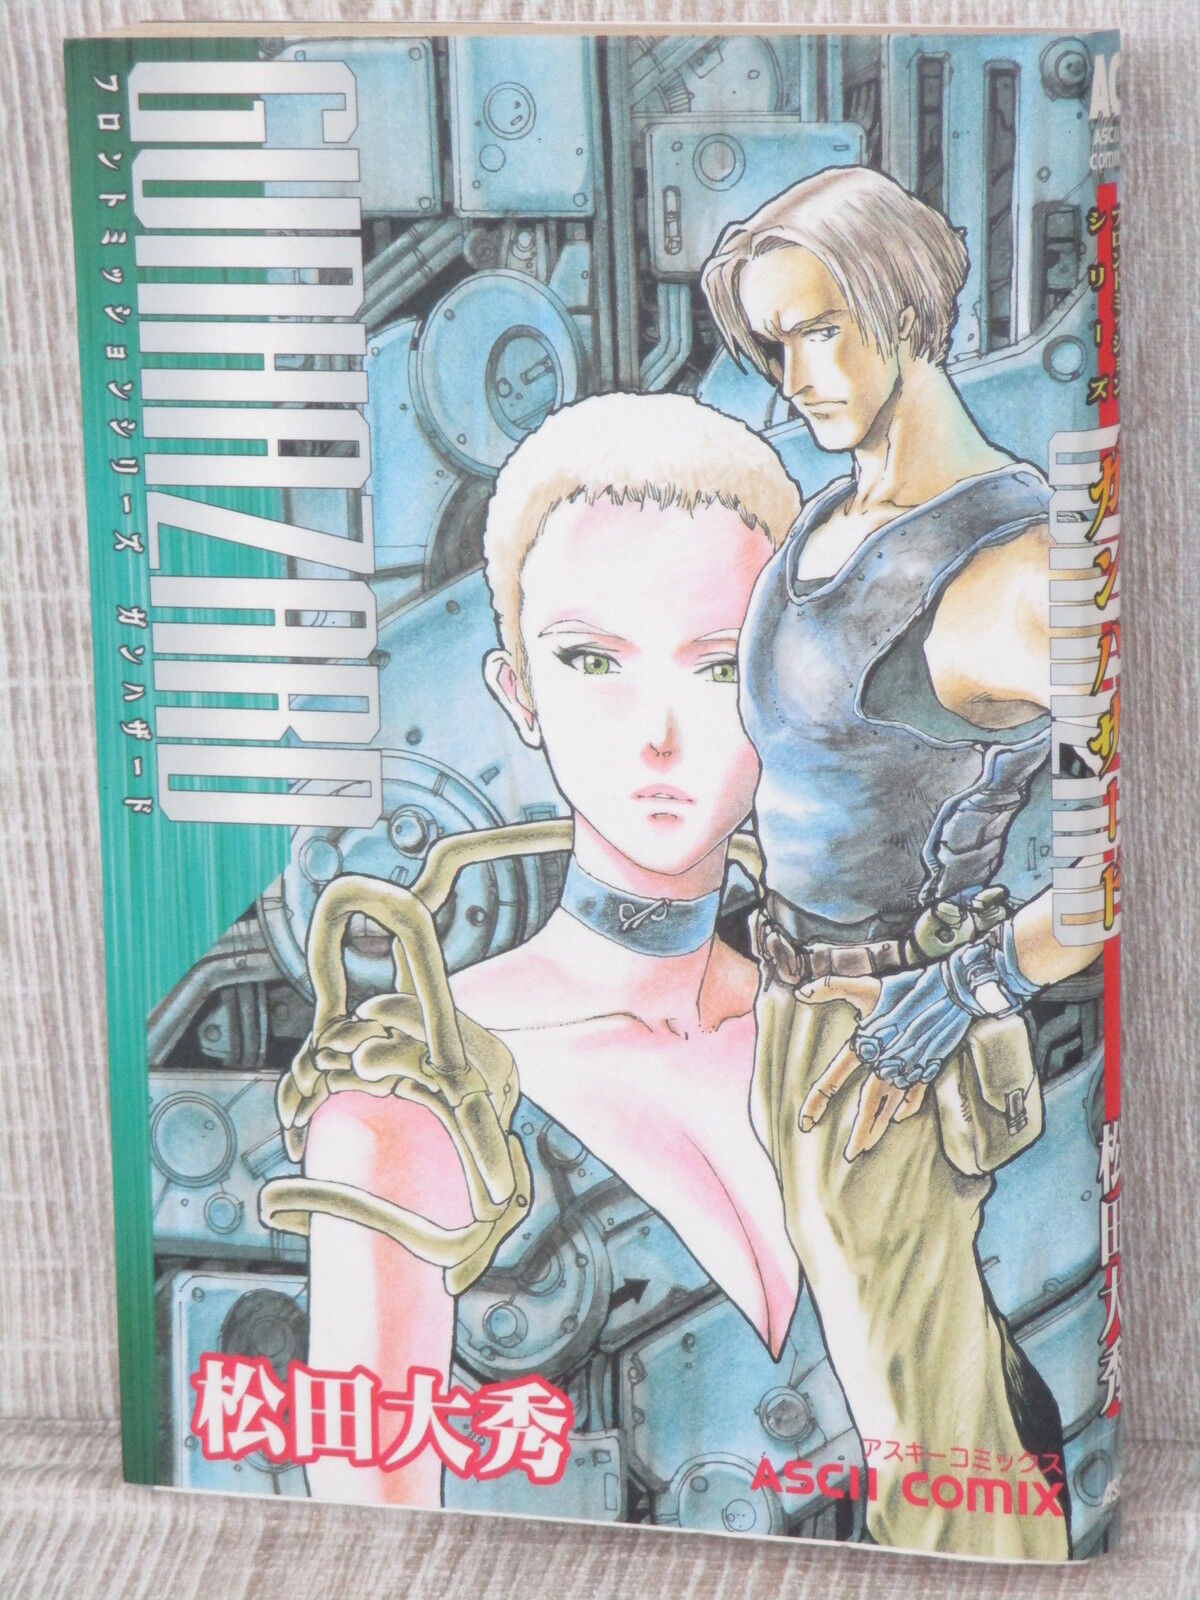 FRONT MISSION GUNHAZARD Manga Comic TAISHU MATSUDA Japan 1996 SNES Fan Book AC79